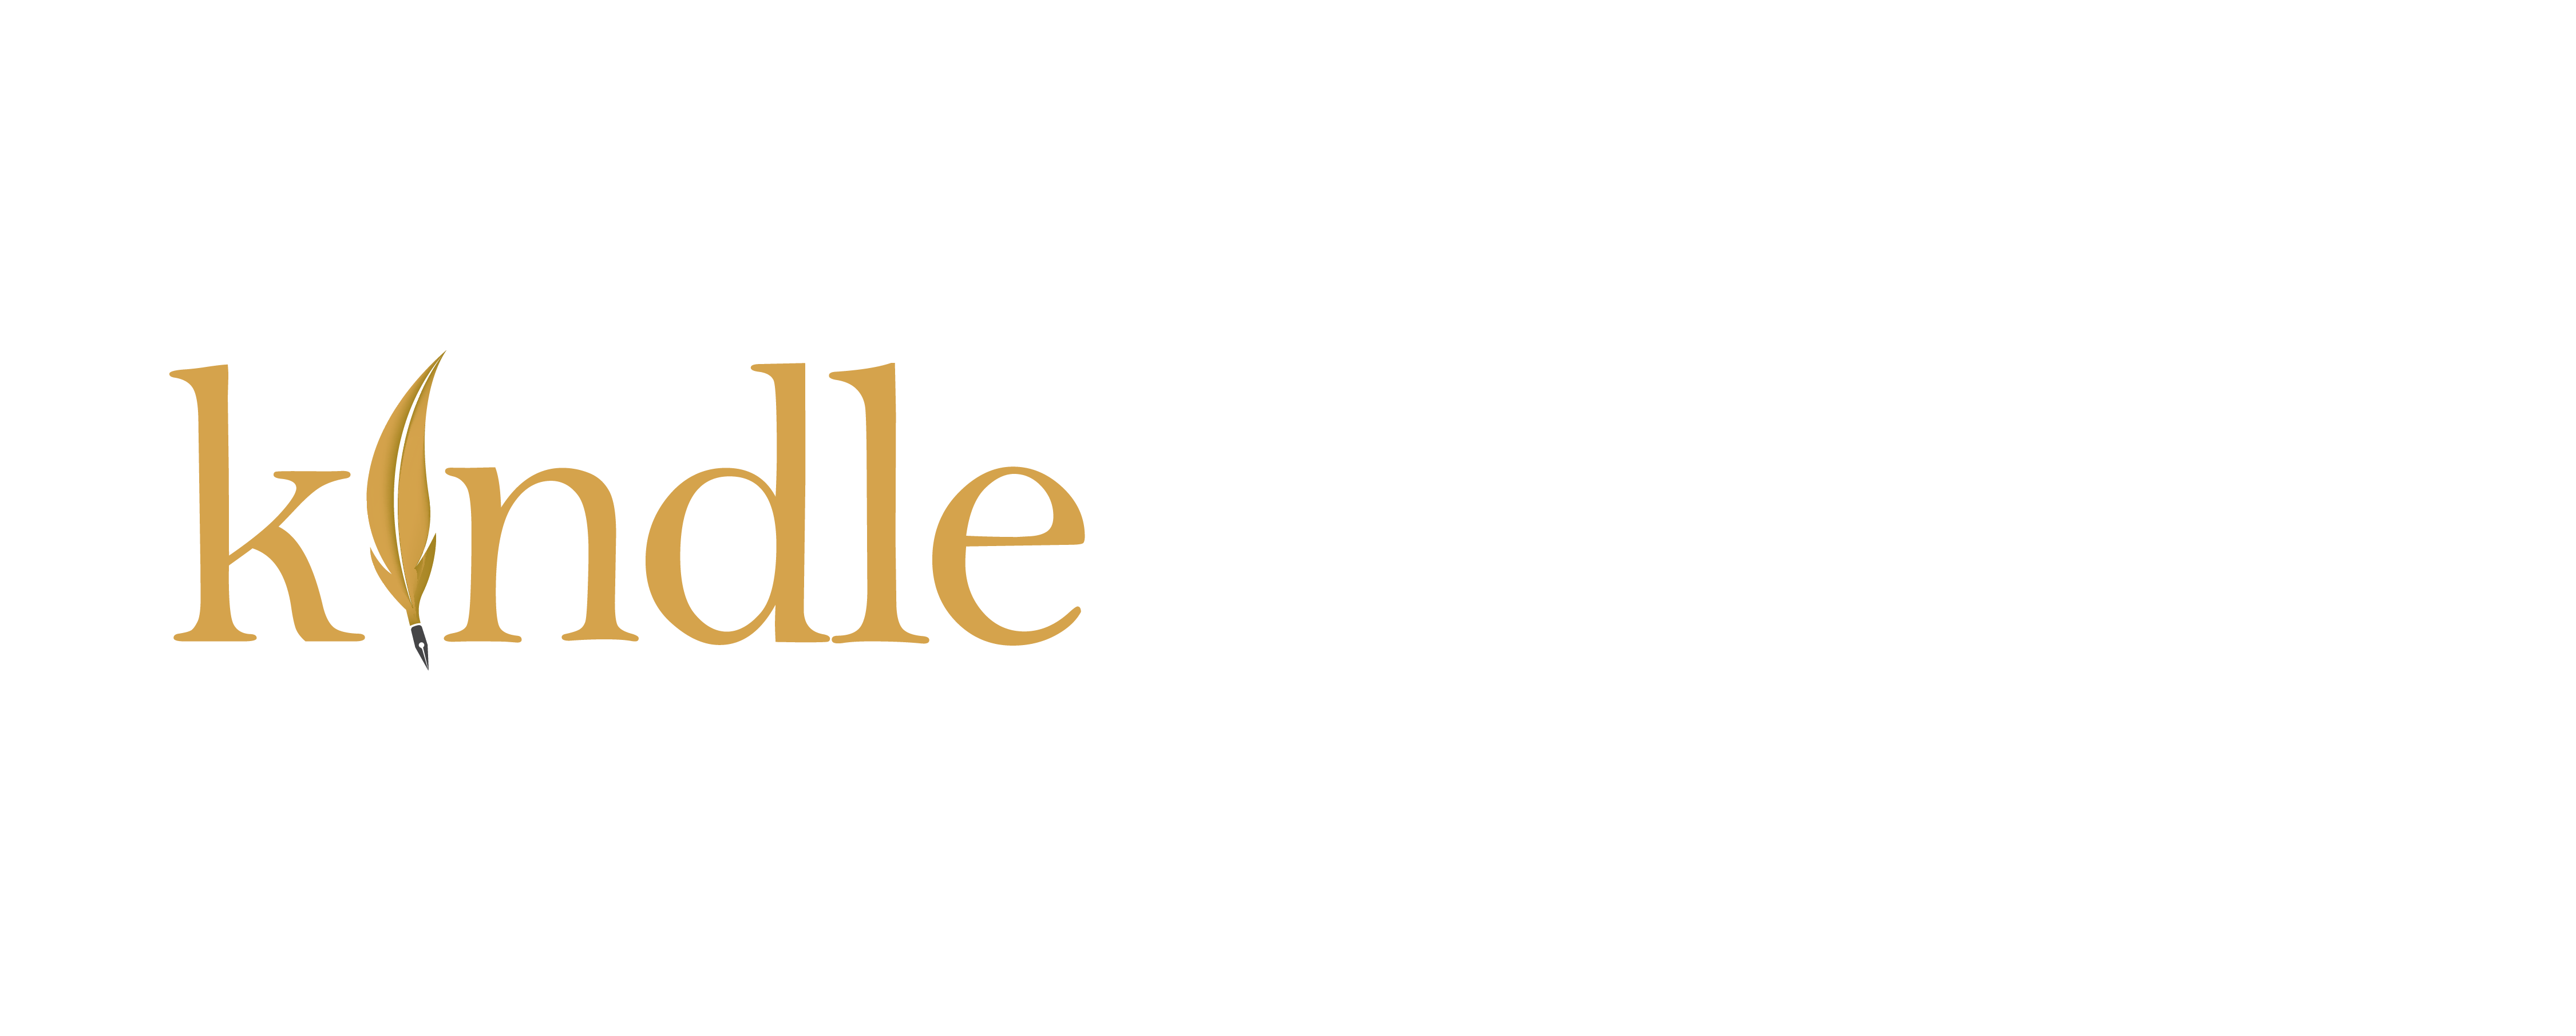 Kindle Ghost Writing